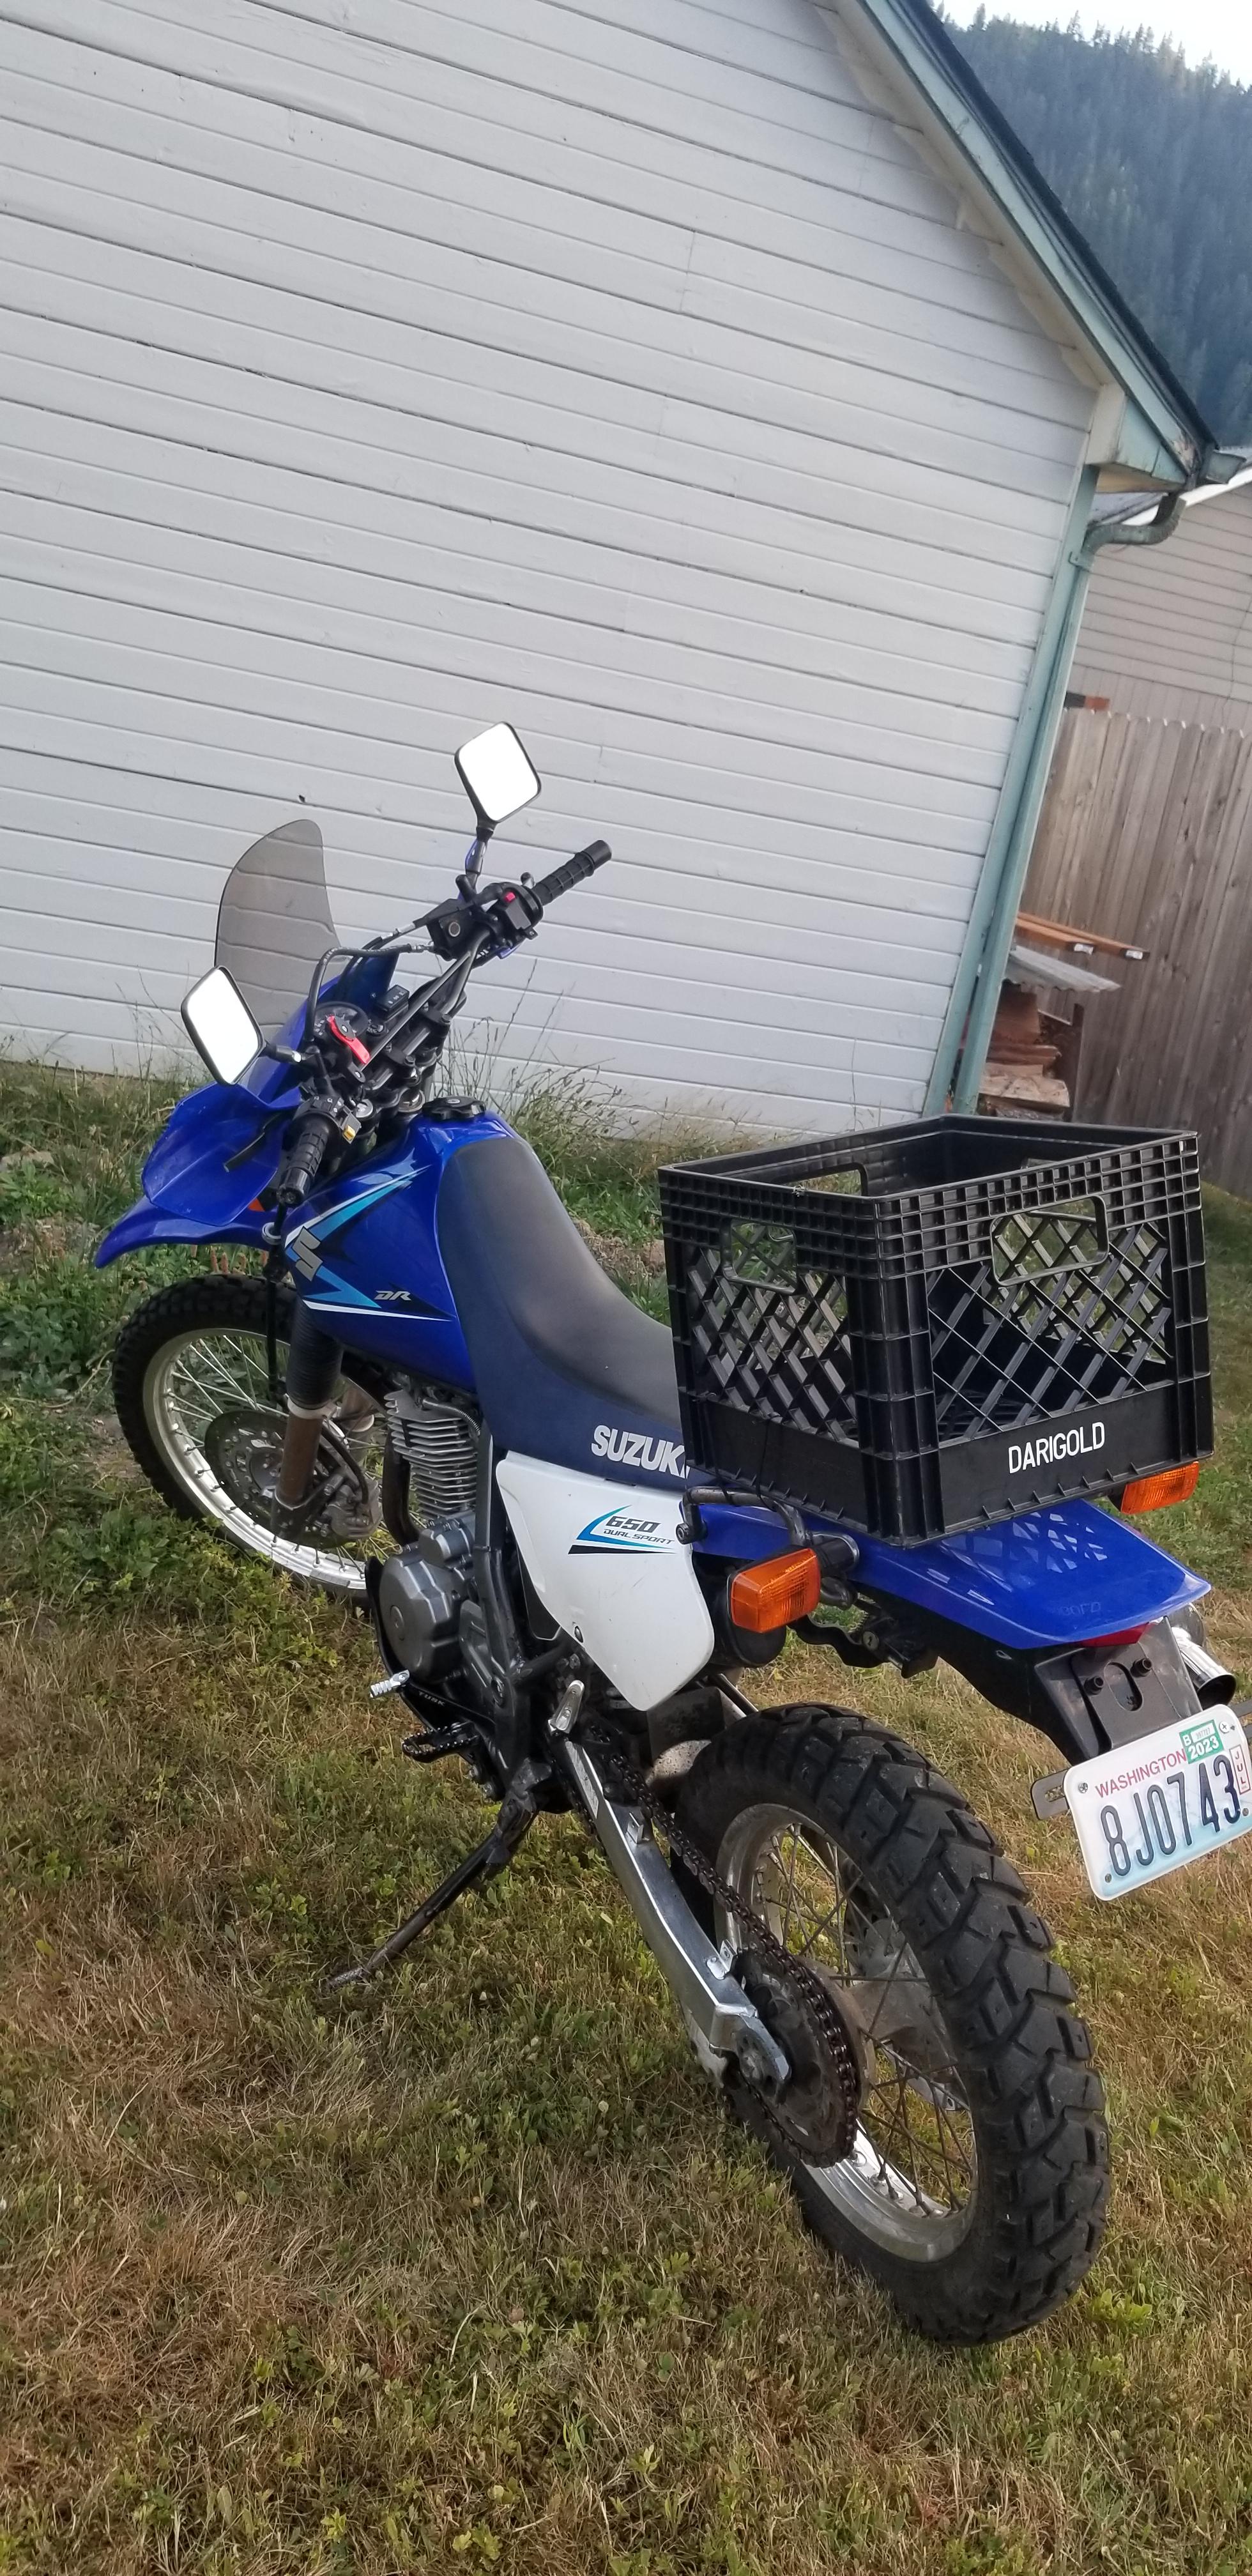 milk crate on motorcycle